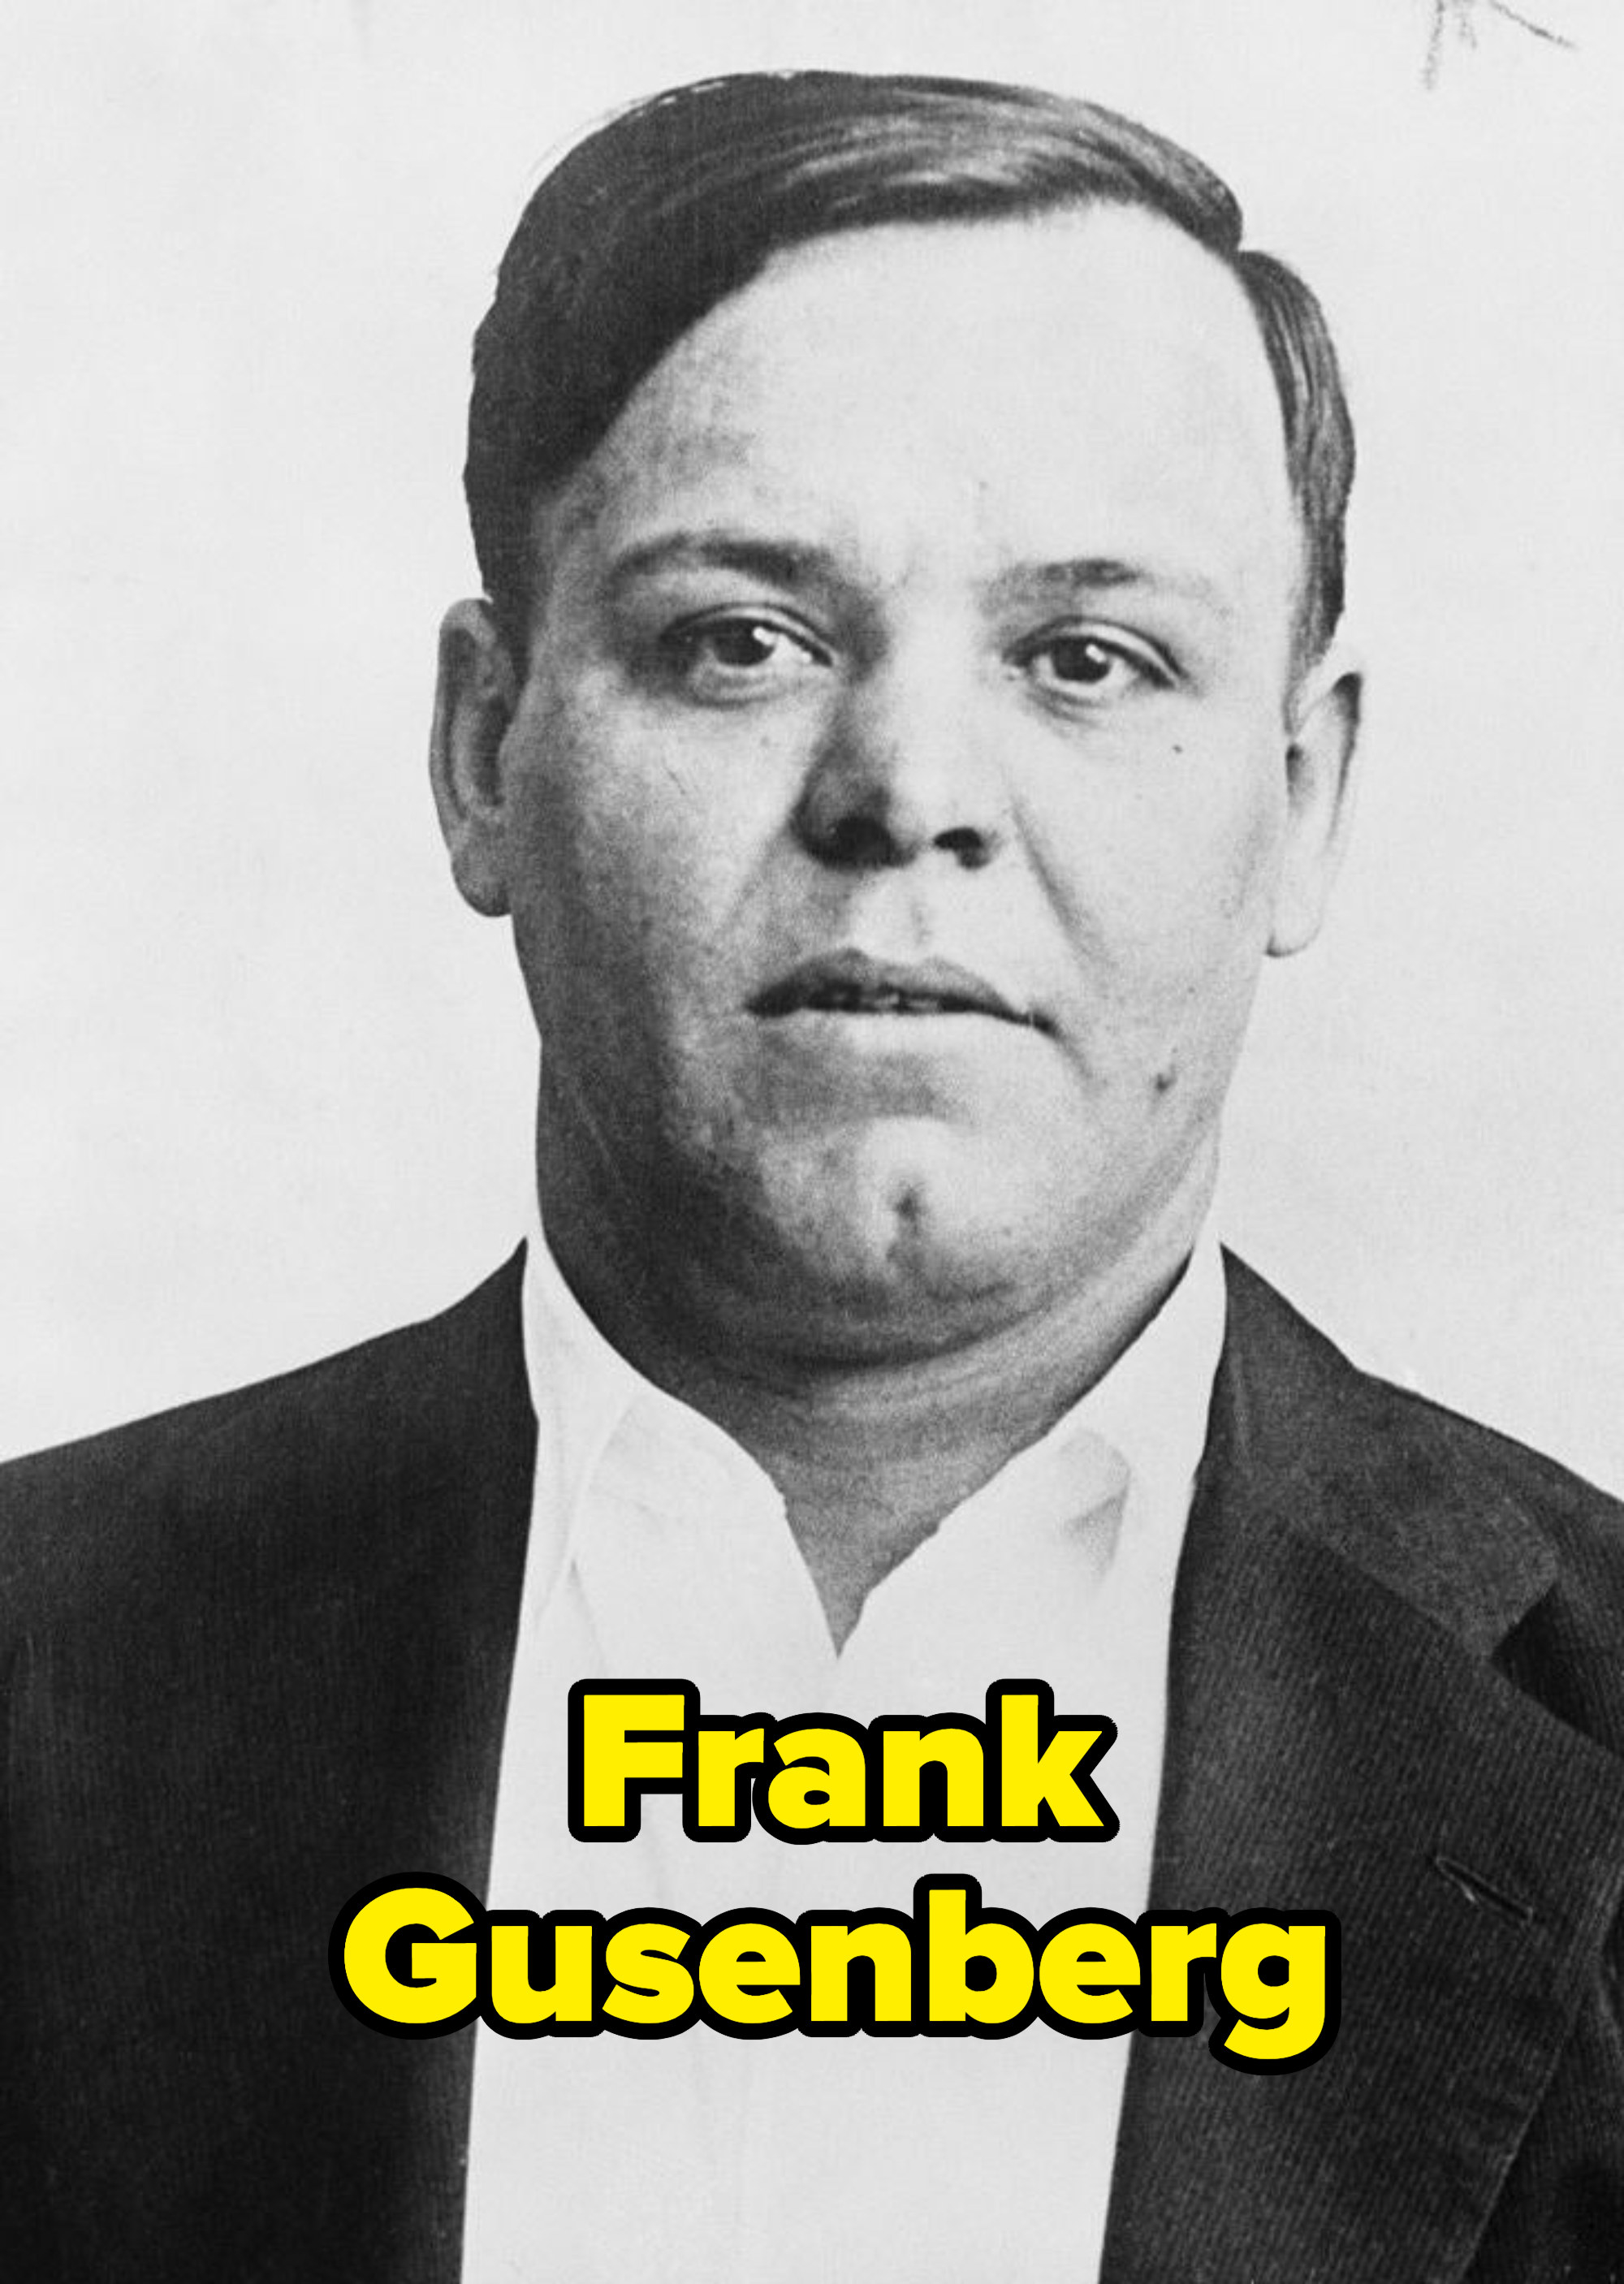 Frank Gusenberg